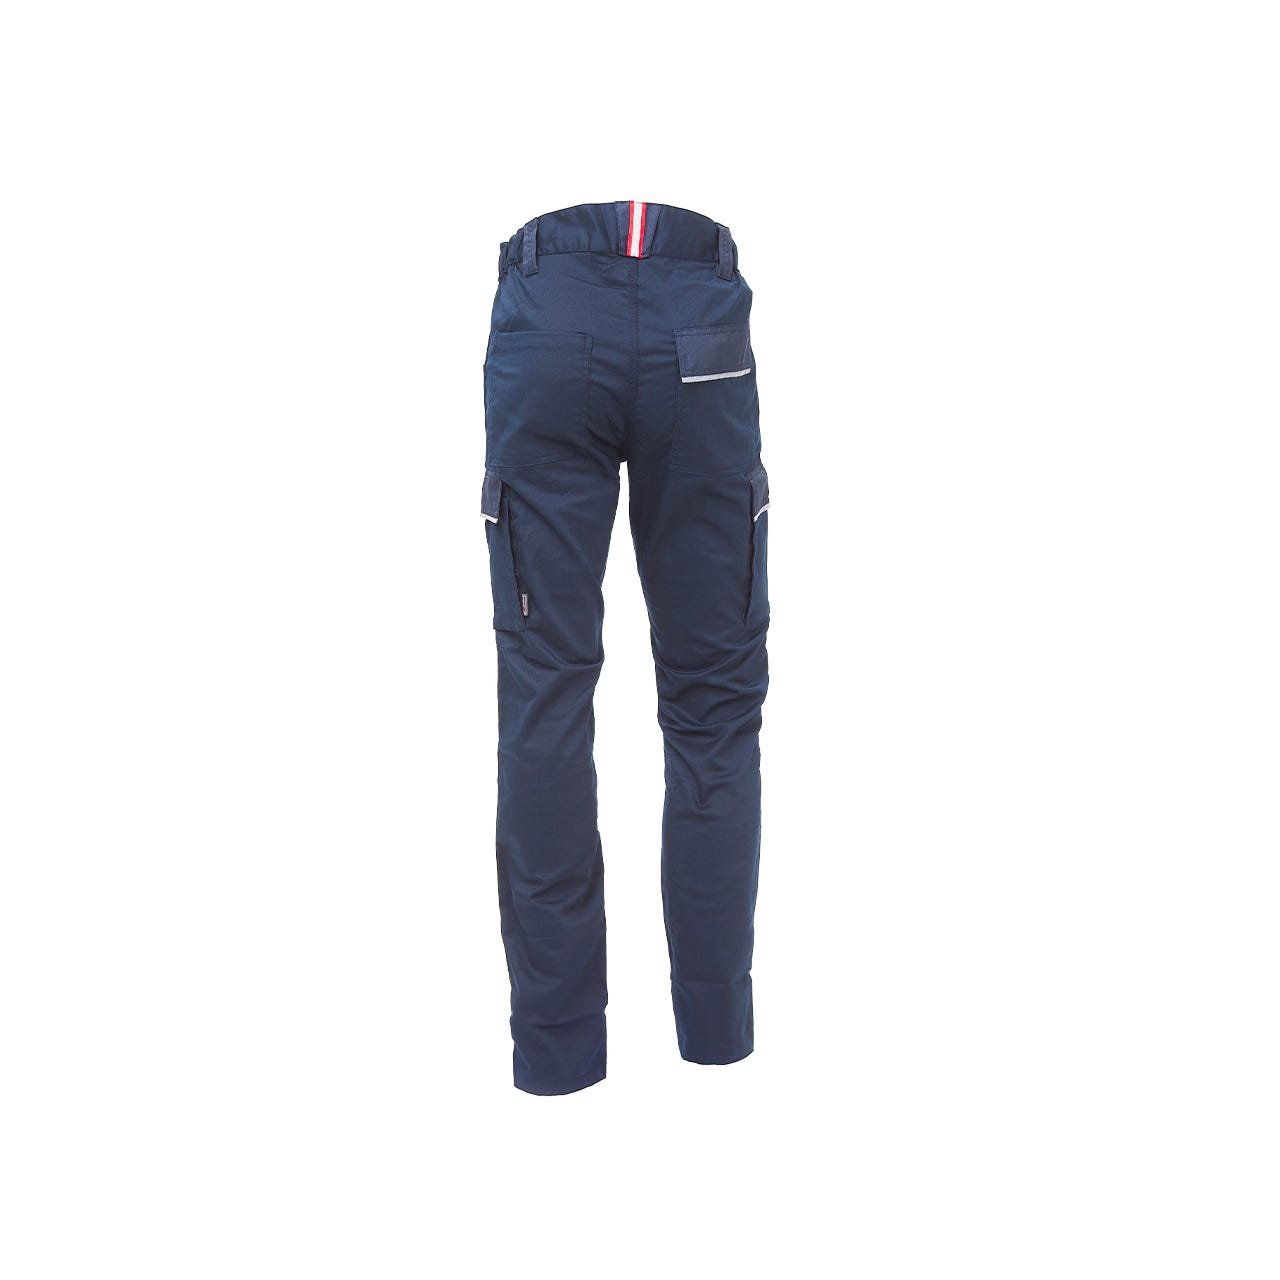 U-Power - Pantalon de travail bleu foncé Stretch et Slim CRAZY - Bleu Foncé - M 4